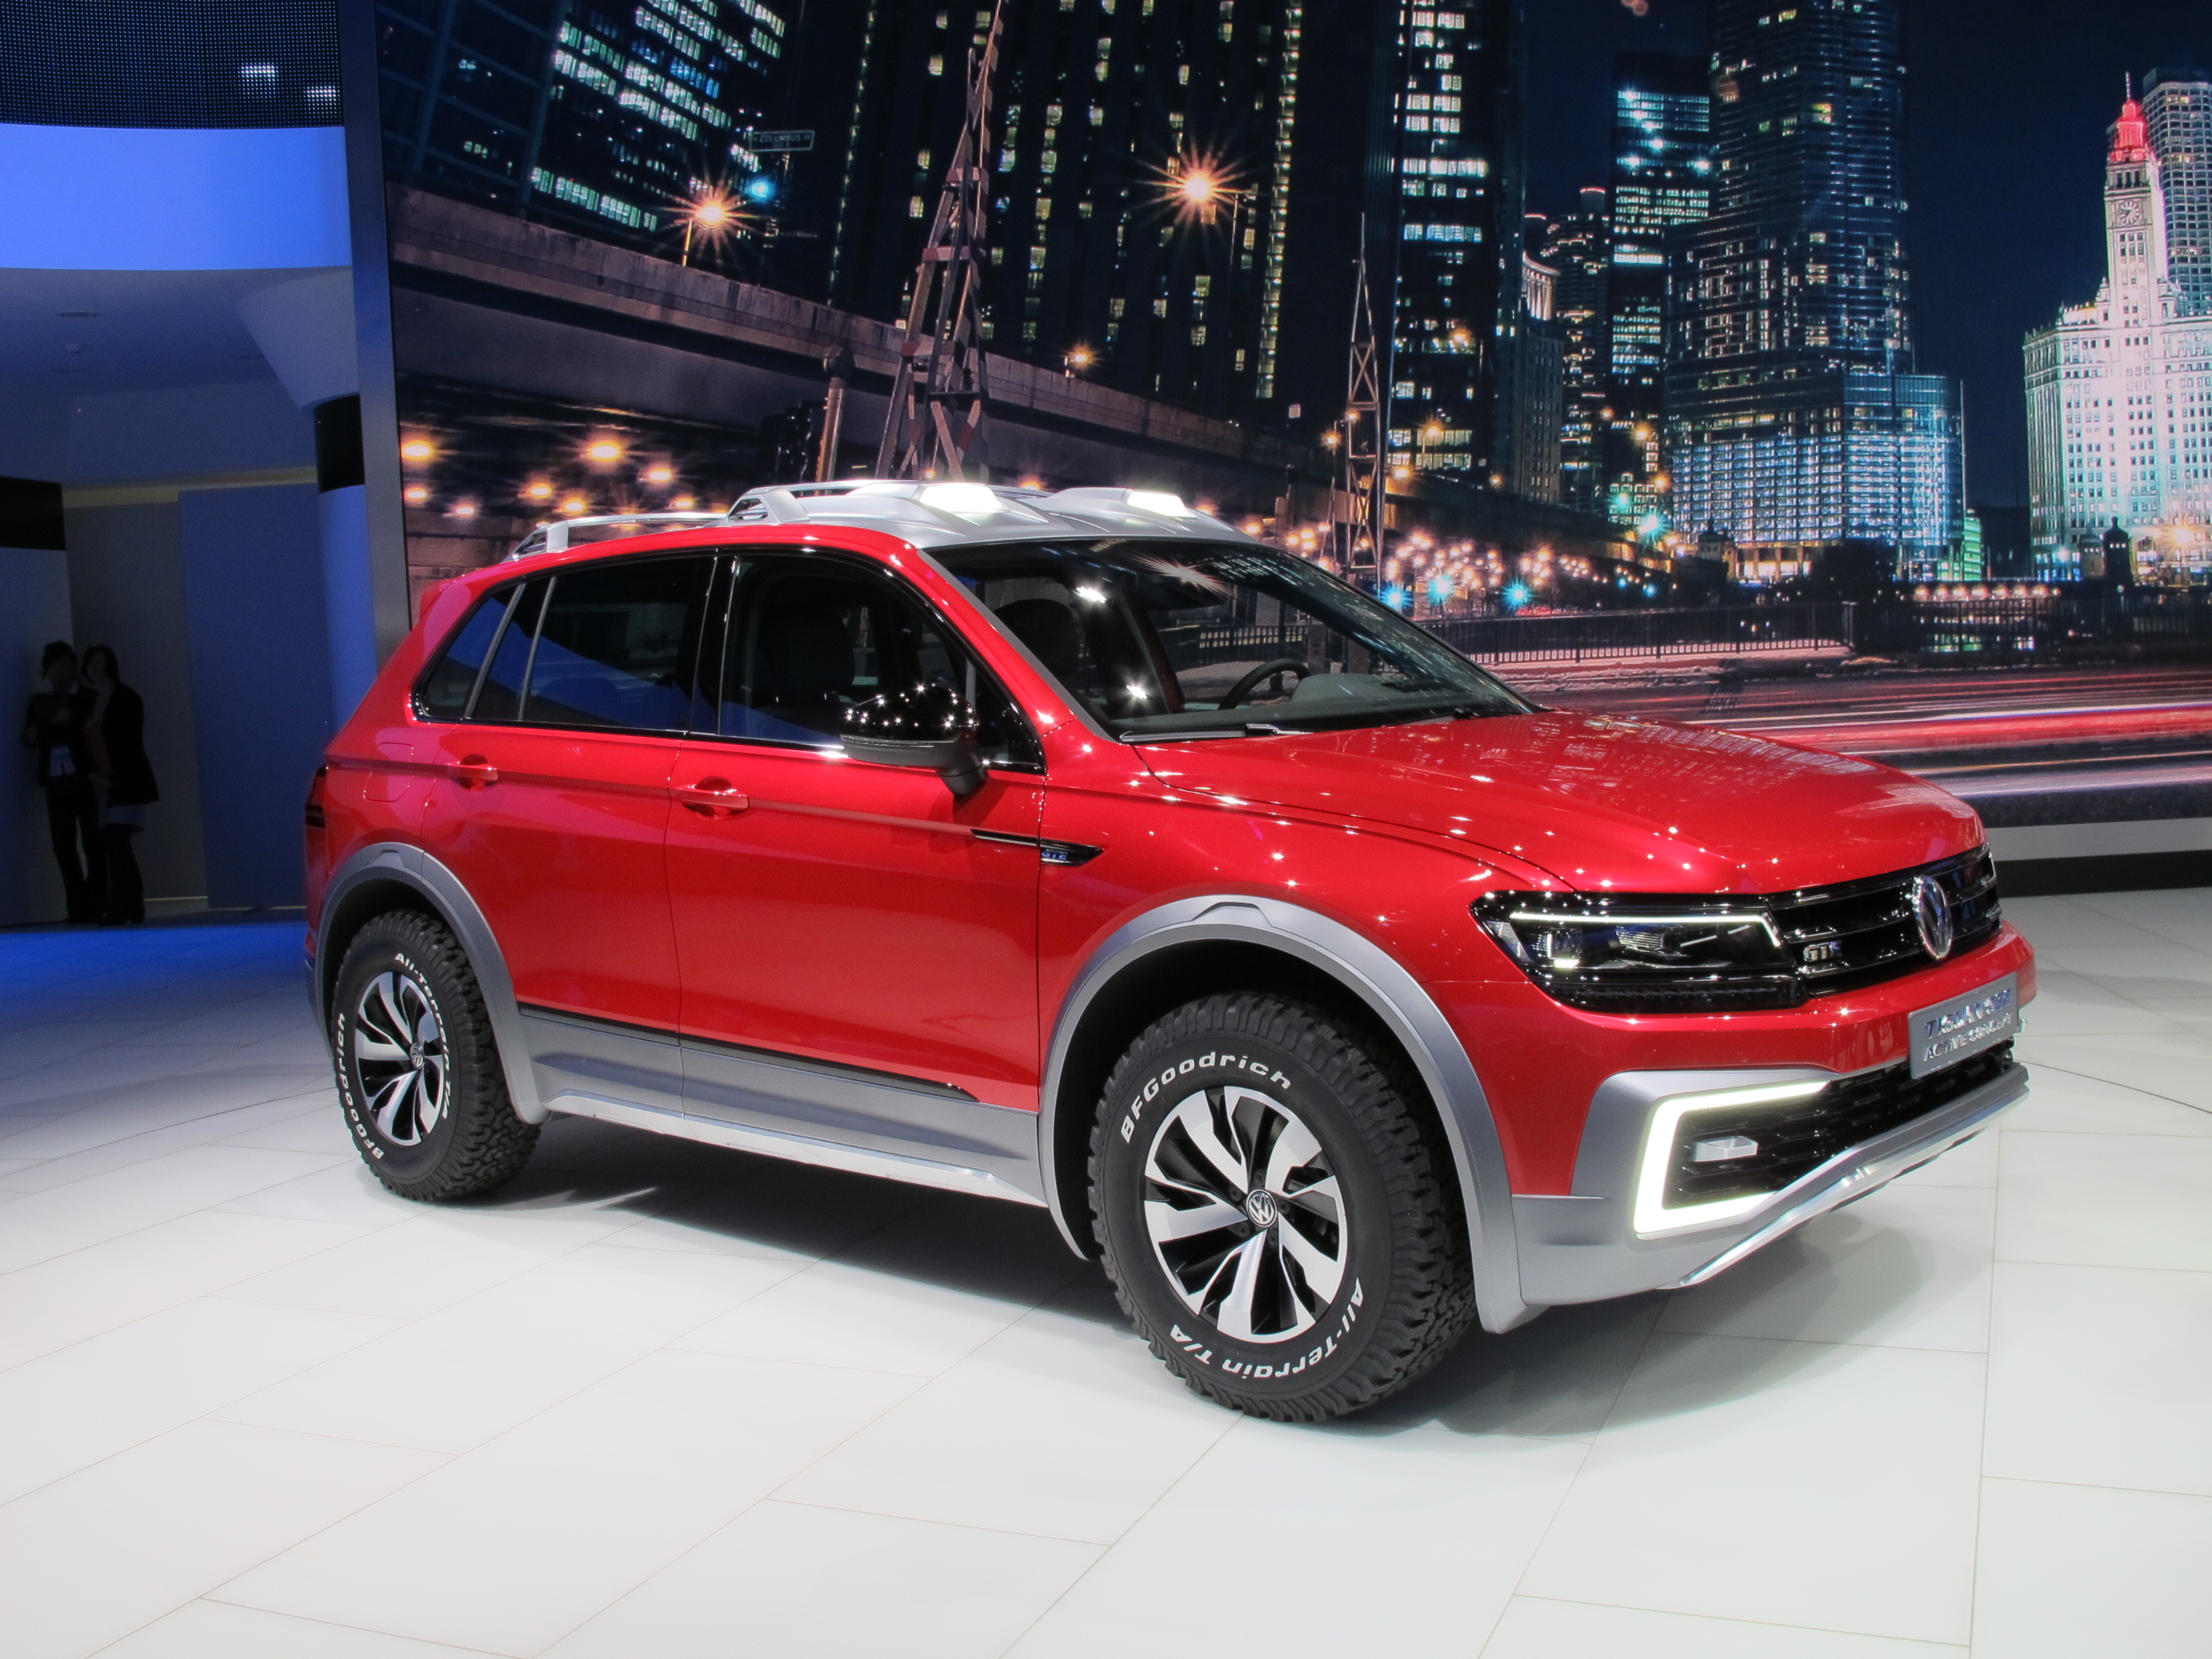 VW Tiguan plug-in hybrid off-road concept debuts in Detroit